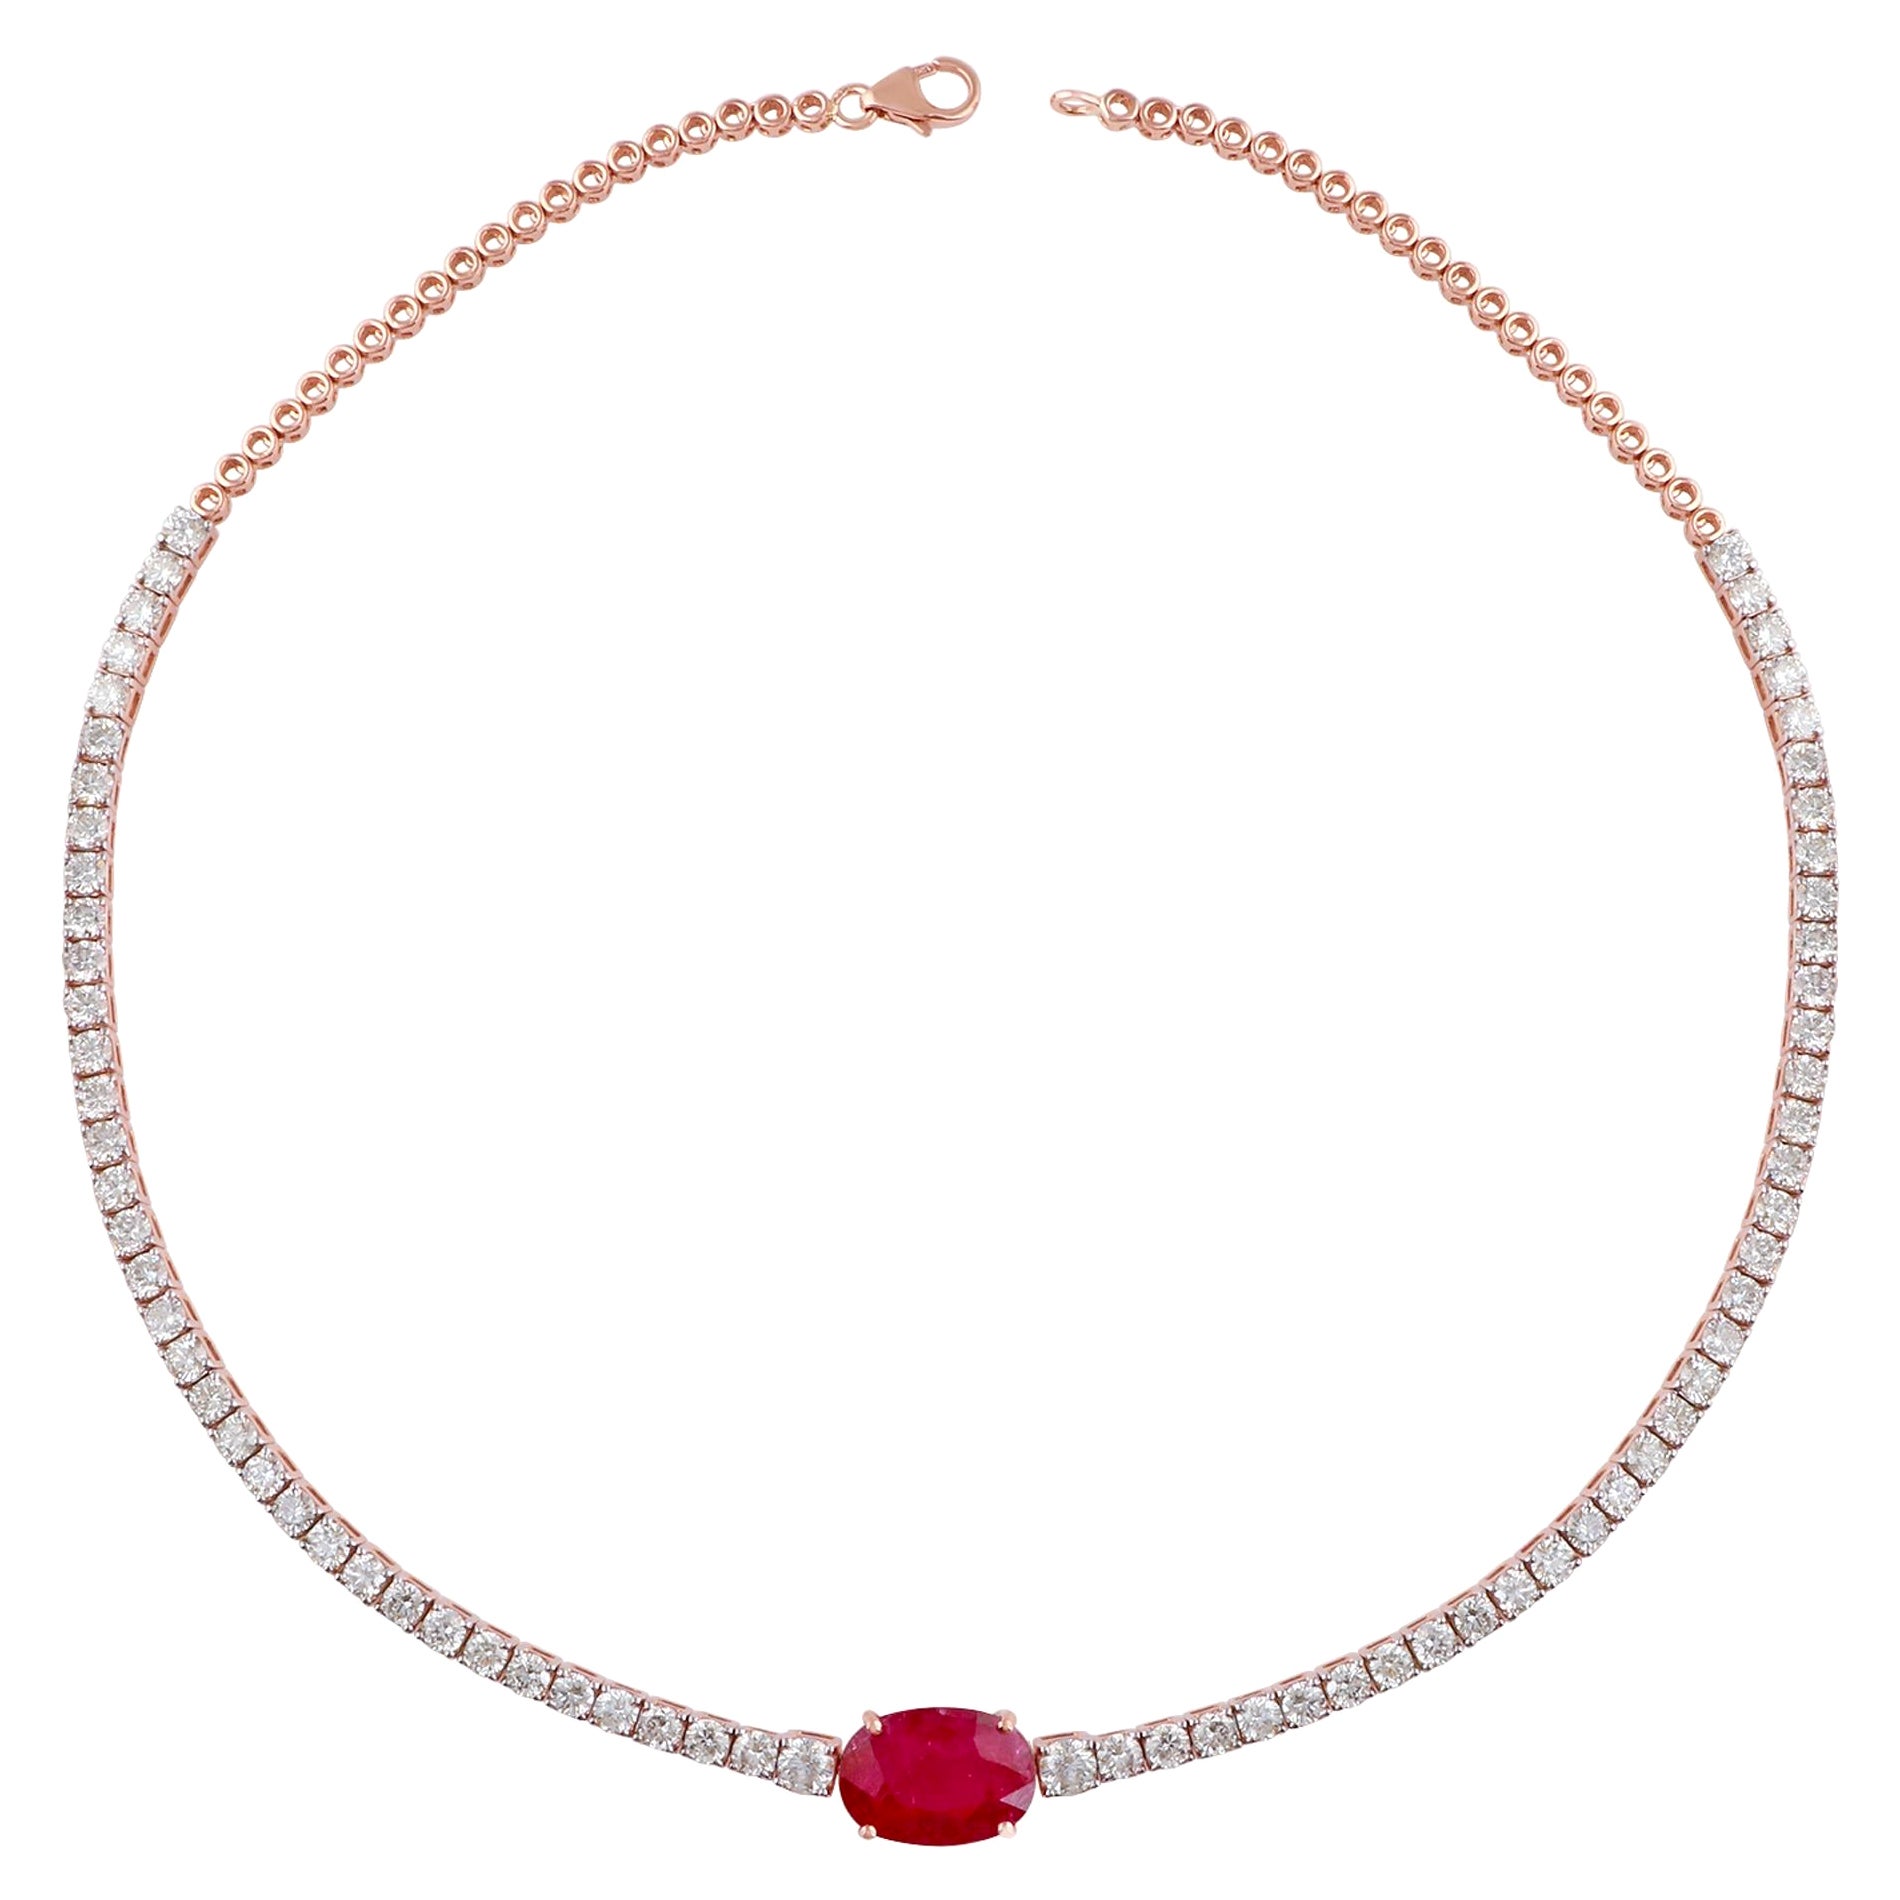 Oval Ruby Gemstone Choker Necklace Diamond 14 Karat Rose Gold Handmade Jewelry For Sale